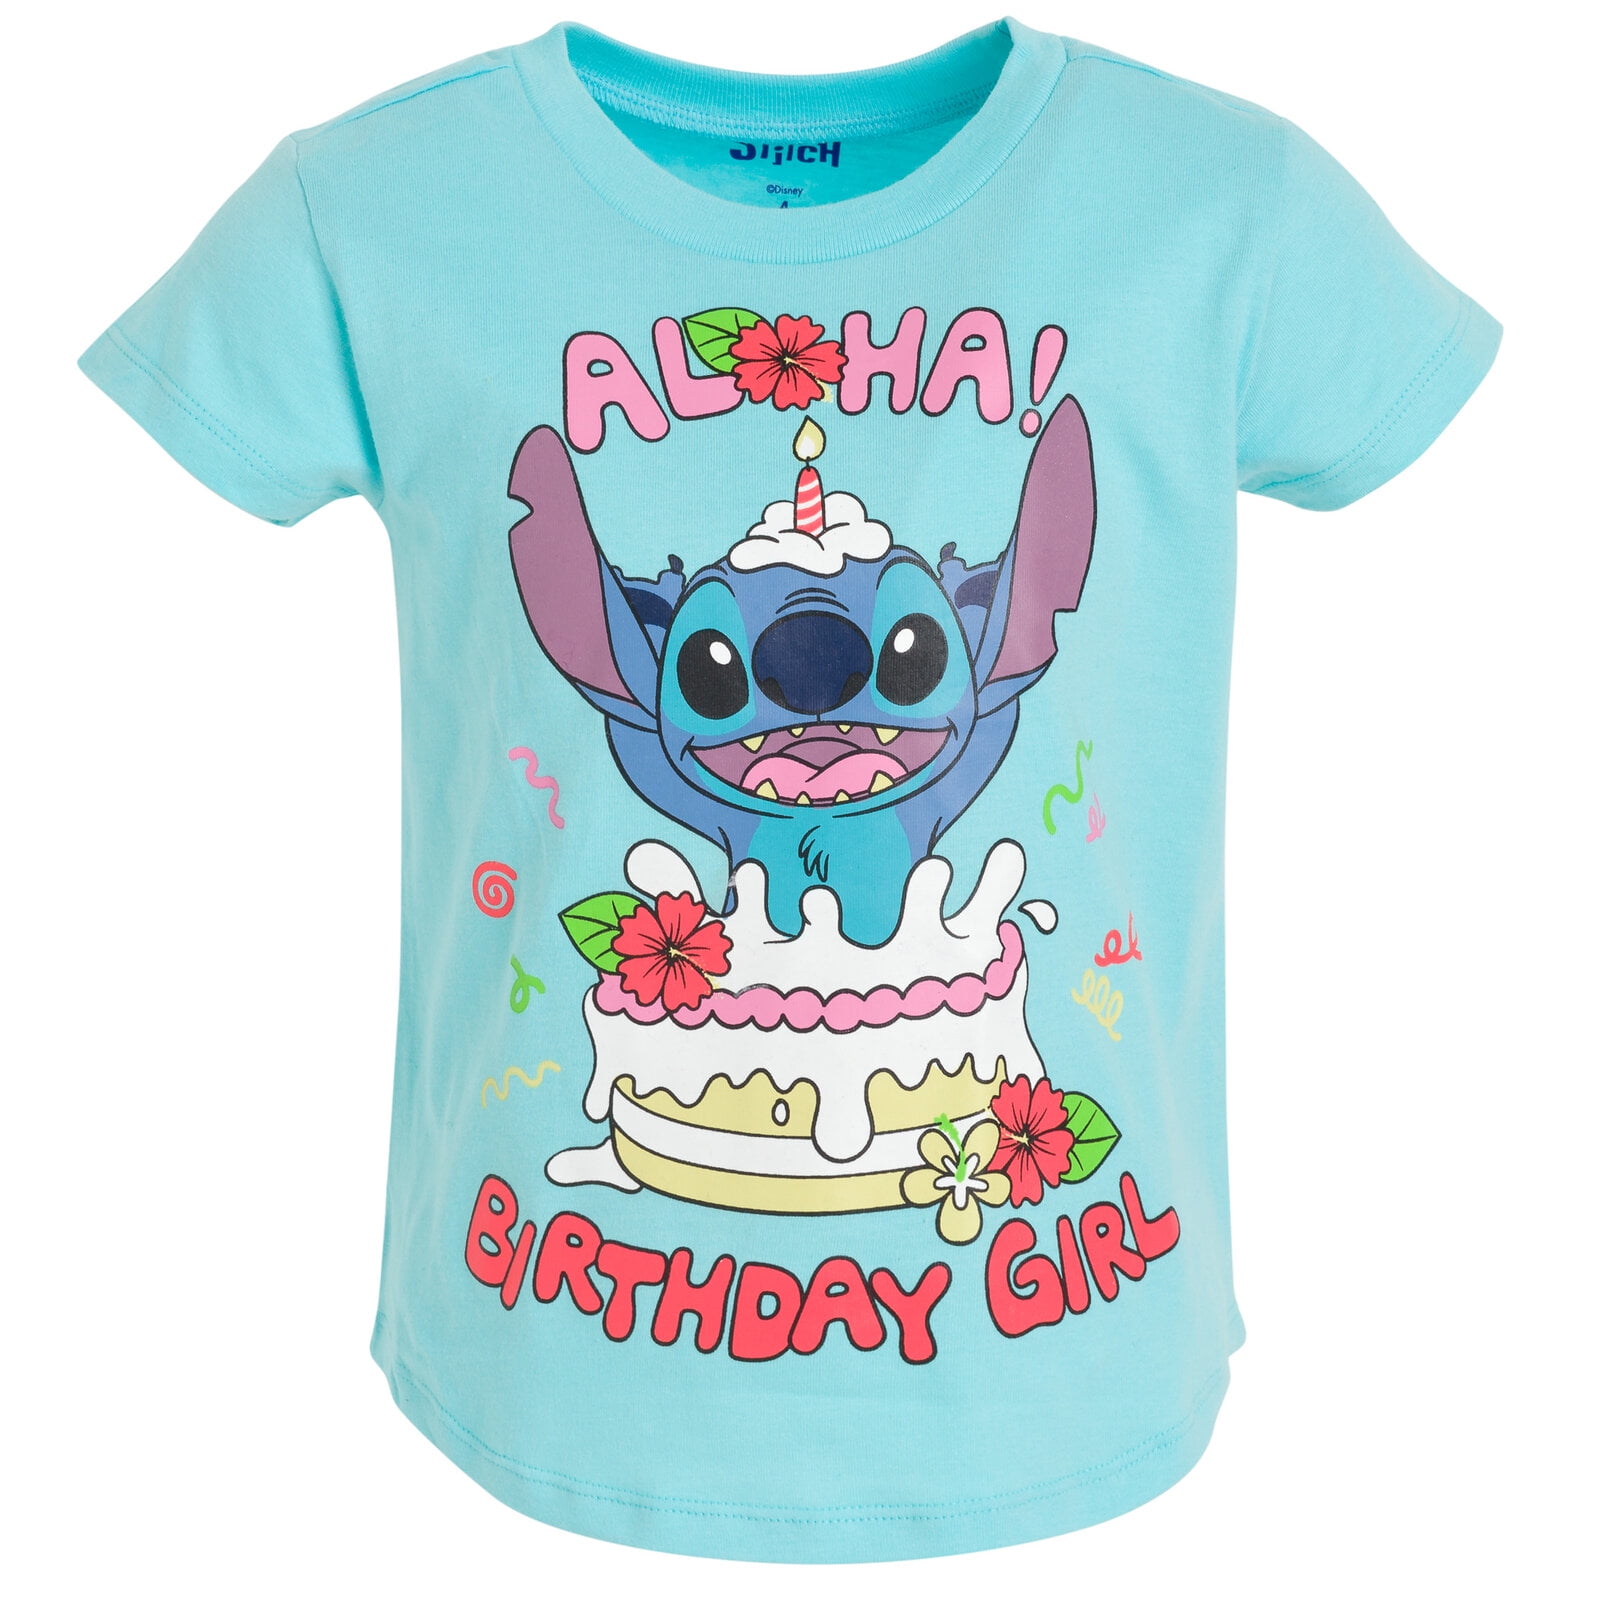 Disney Lilo & Stitch Girls' Cute T-Shirt - white, 14 - 16 (Big Girls)